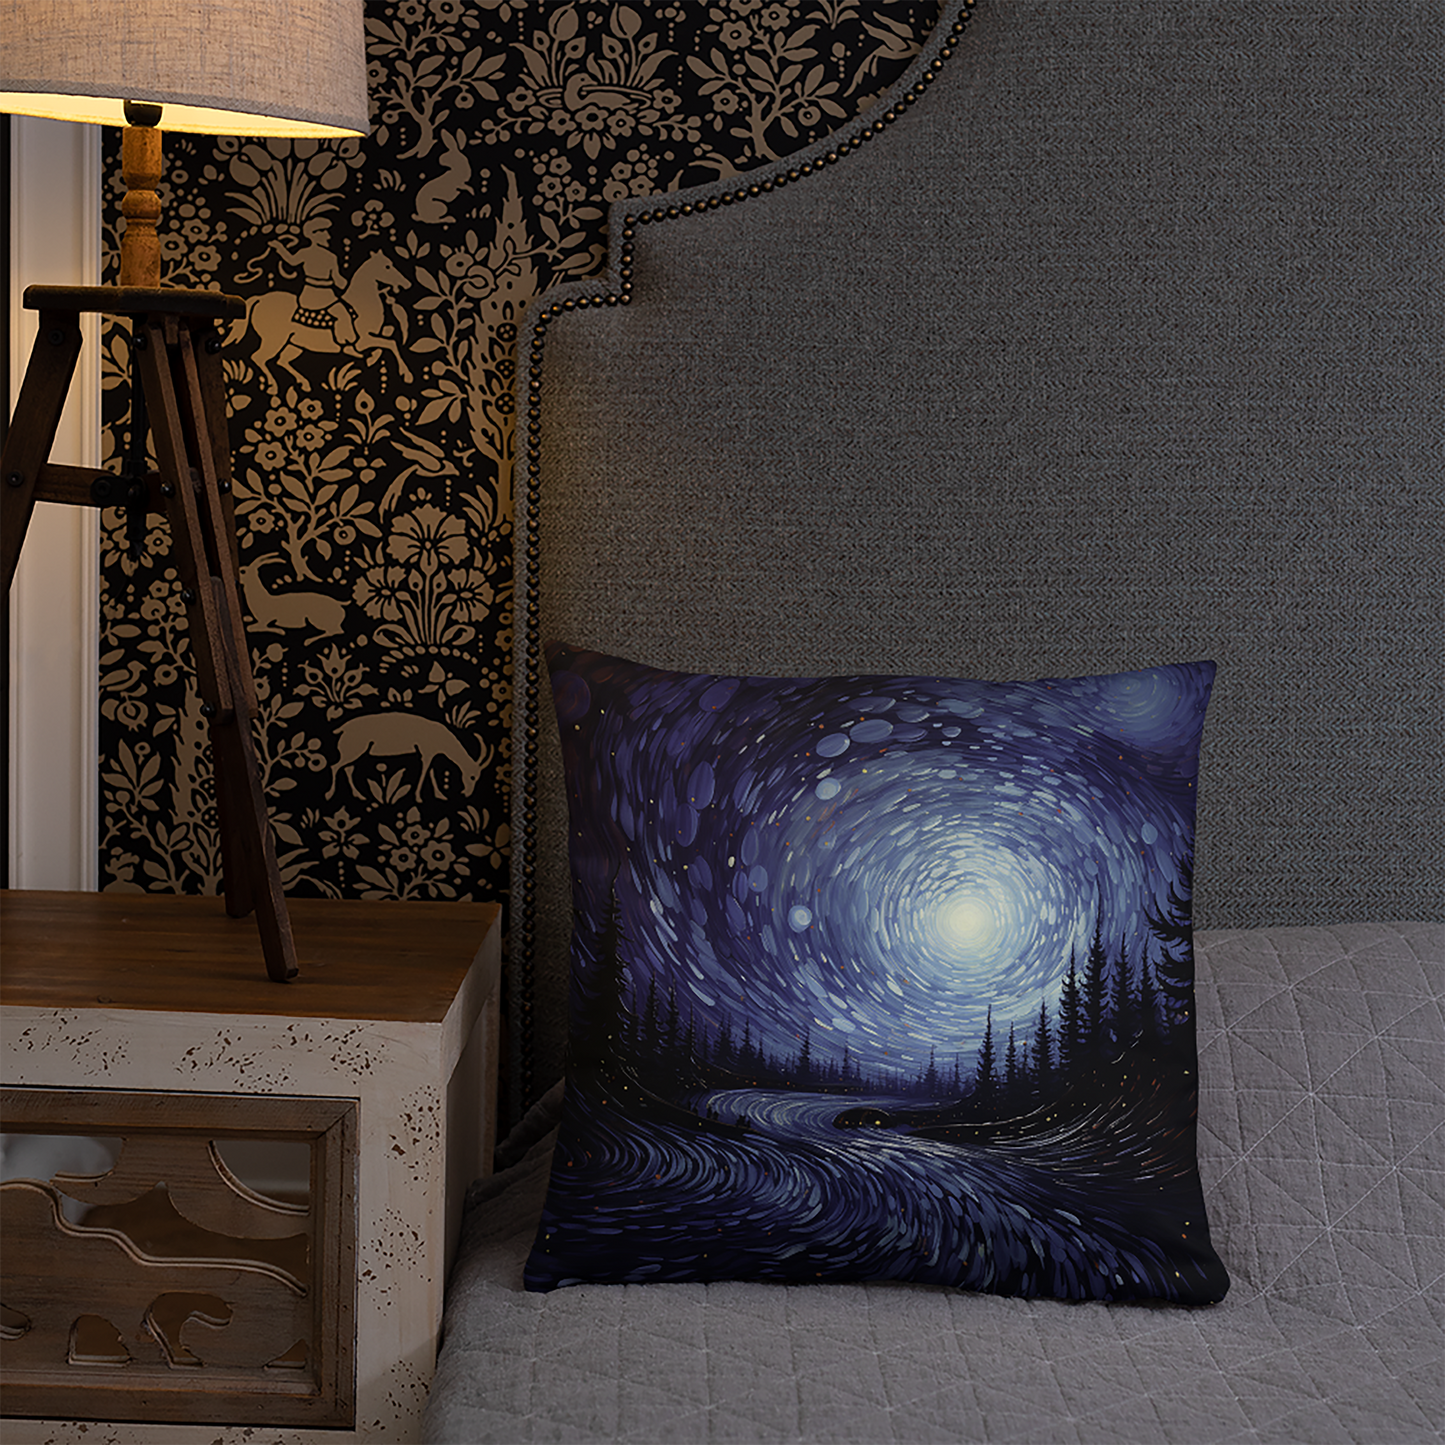 Landscape Throw Pillow Illusion Moonlit Wilderness Polyester Decorative Cushion 18x18